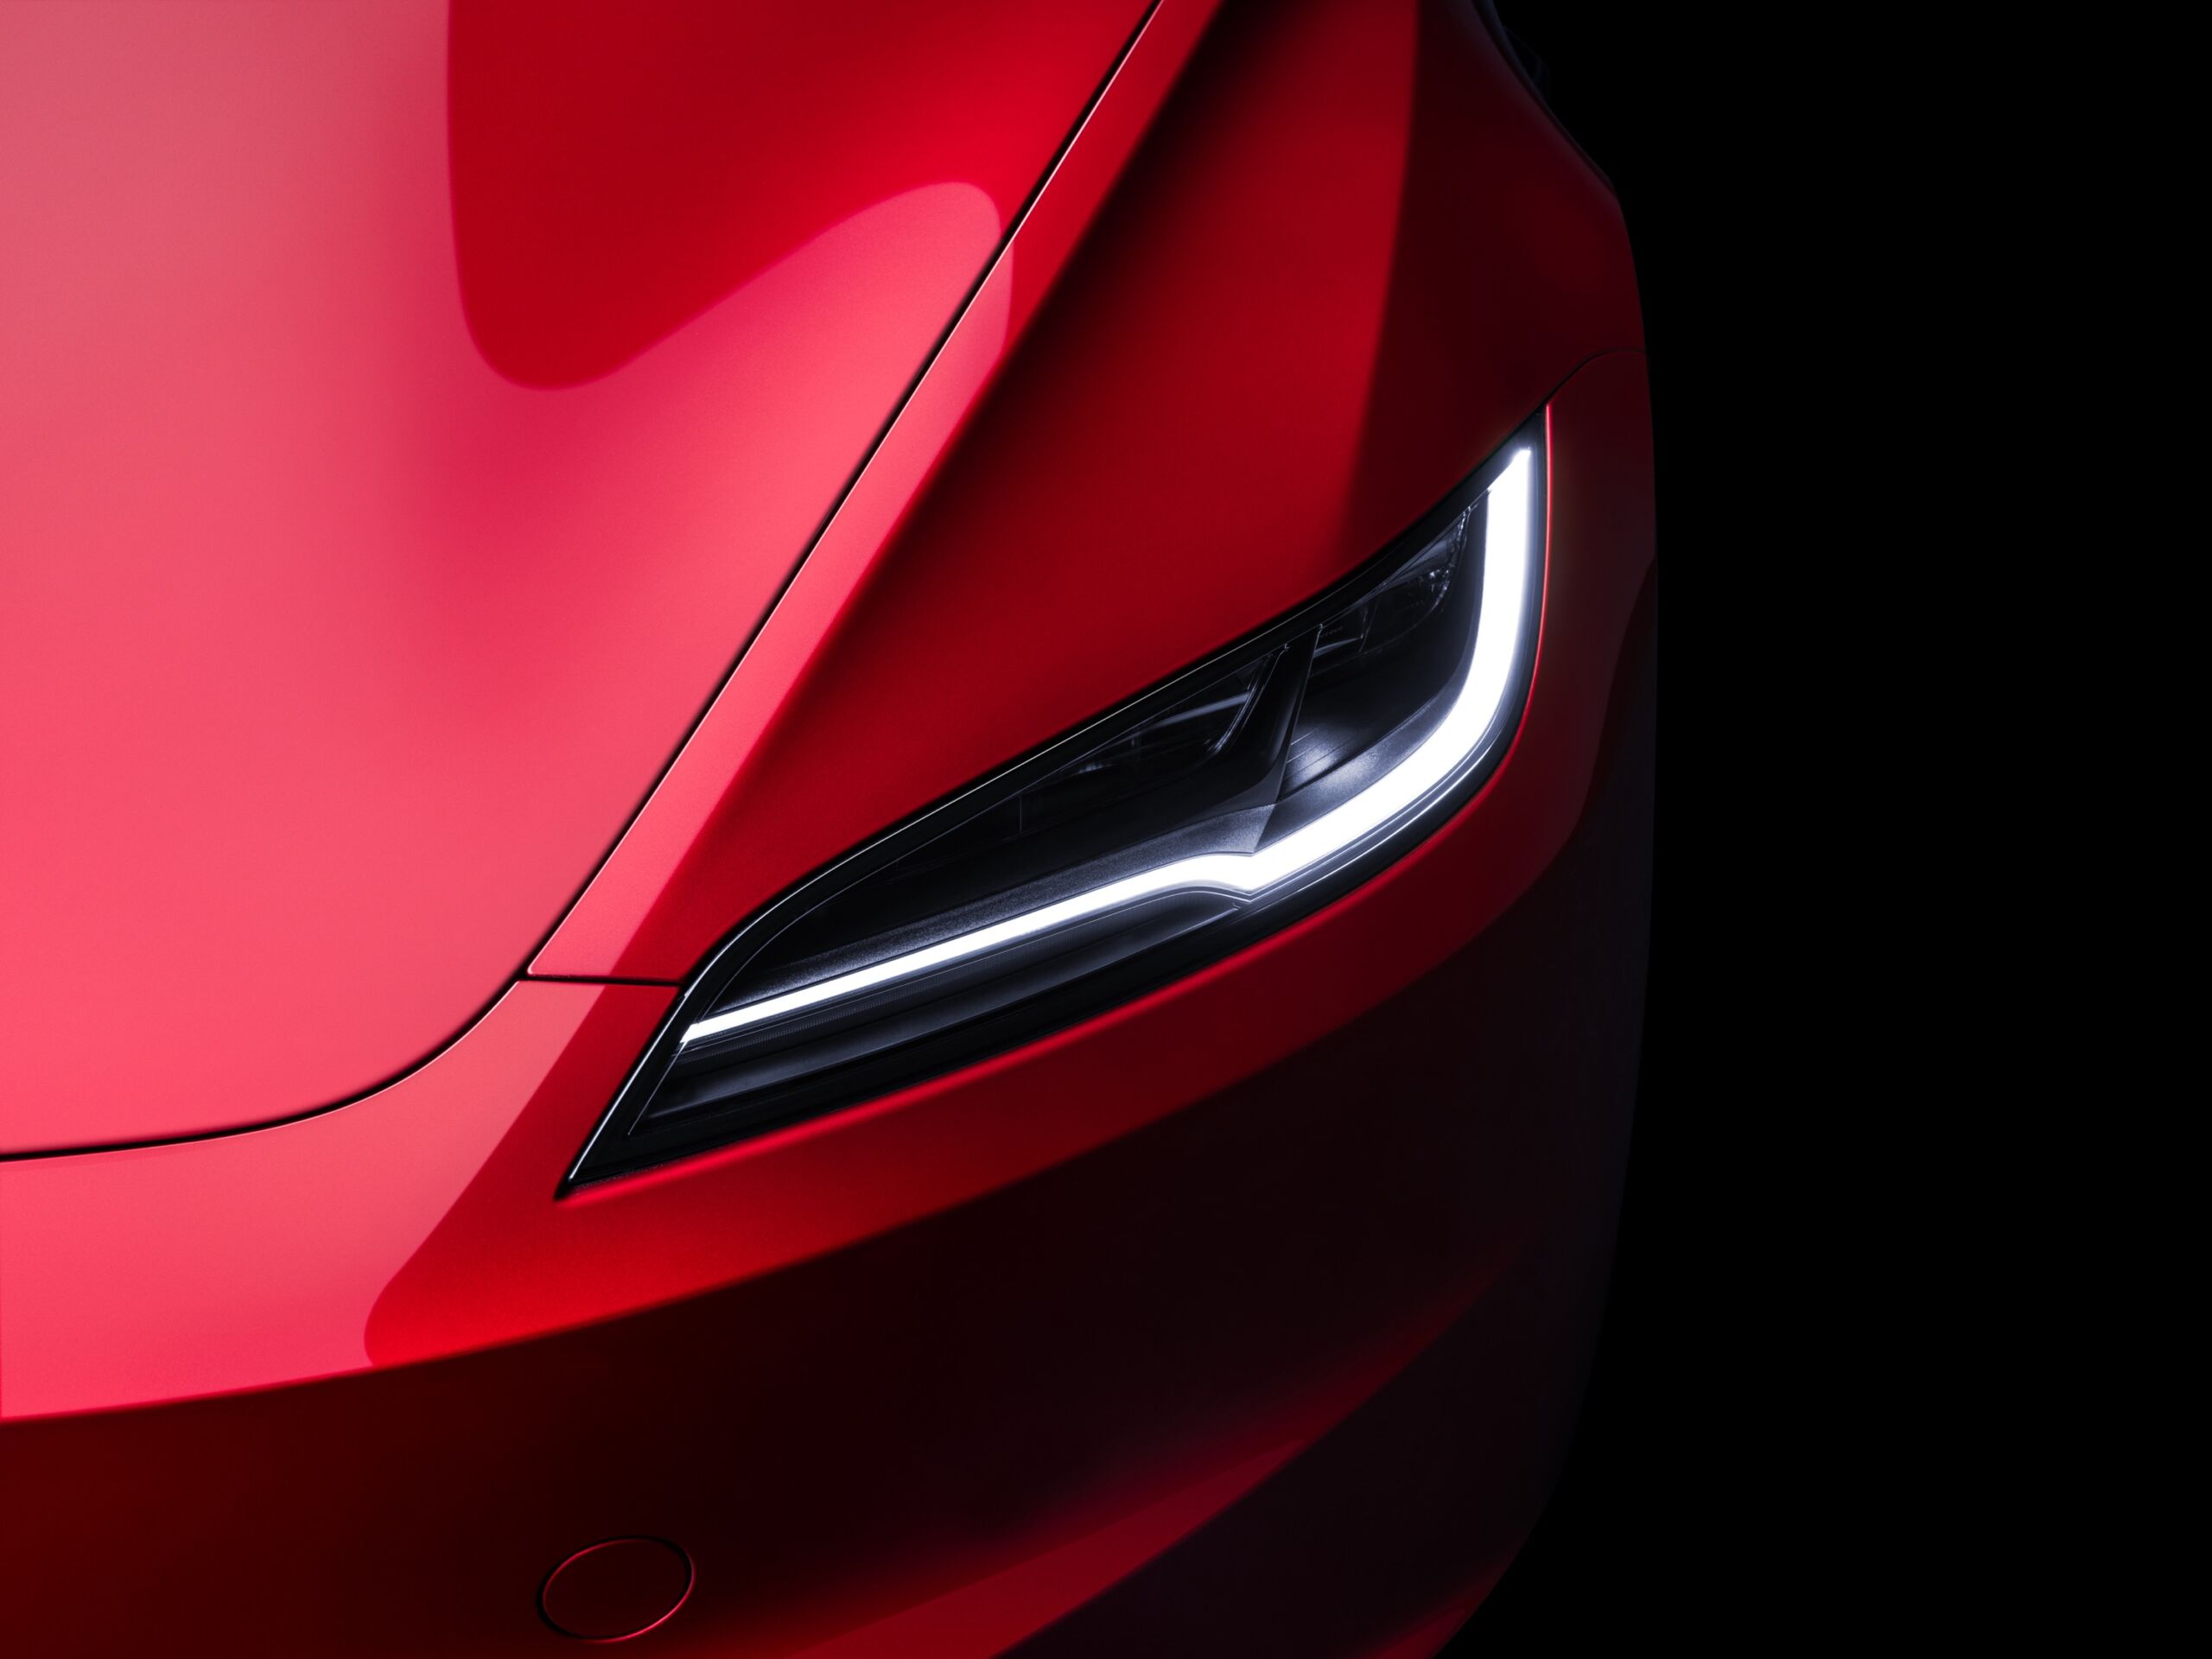 Tesla's revamped Model 3 sedan has now gone on sale in the US